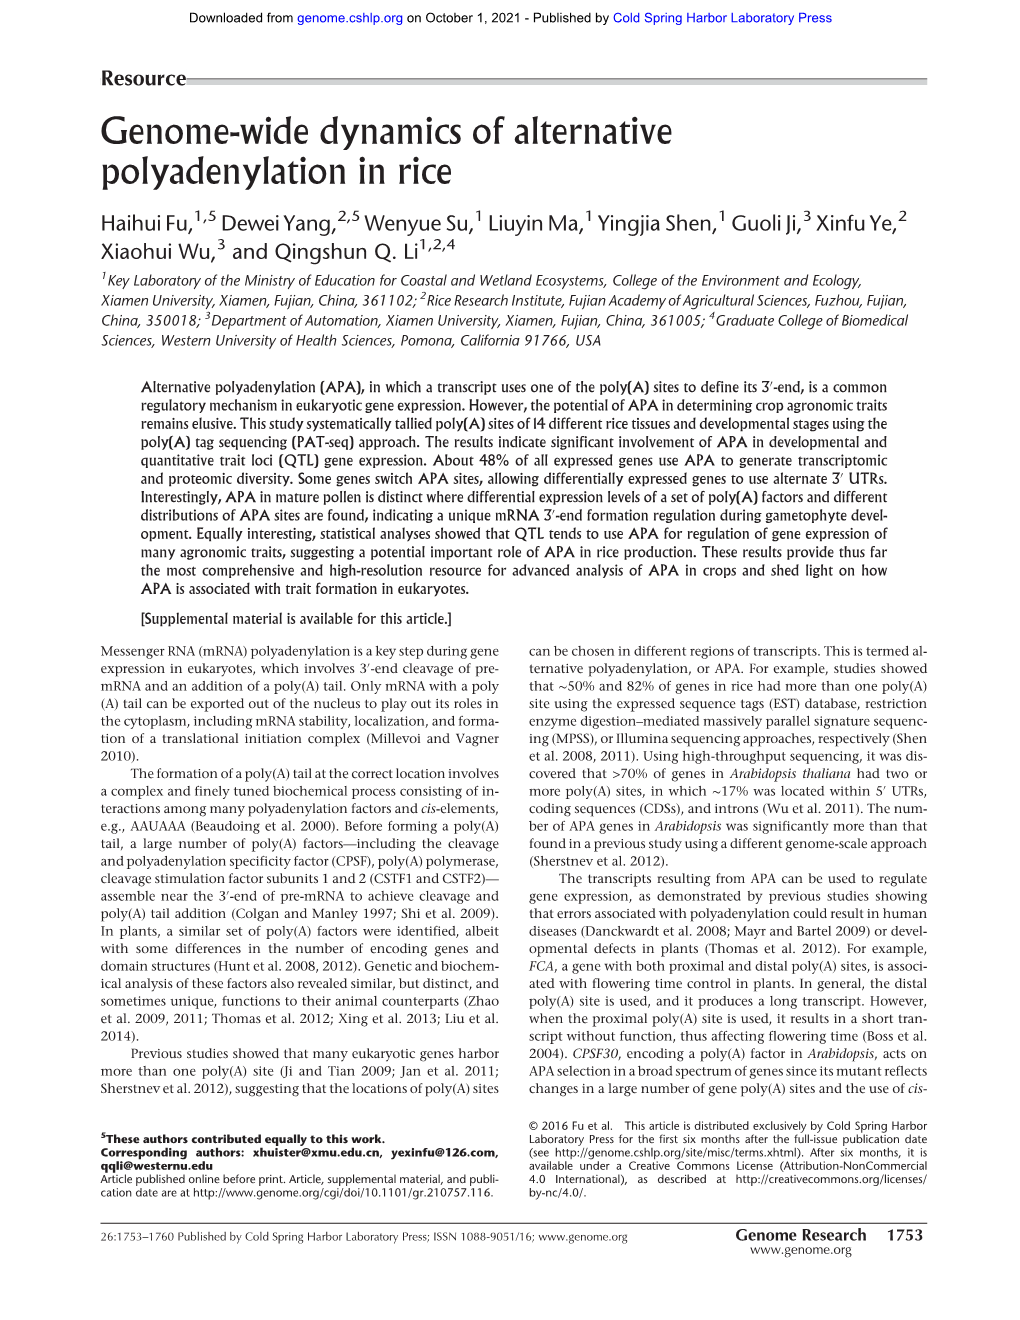 Genome-Wide Dynamics of Alternative Polyadenylation in Rice